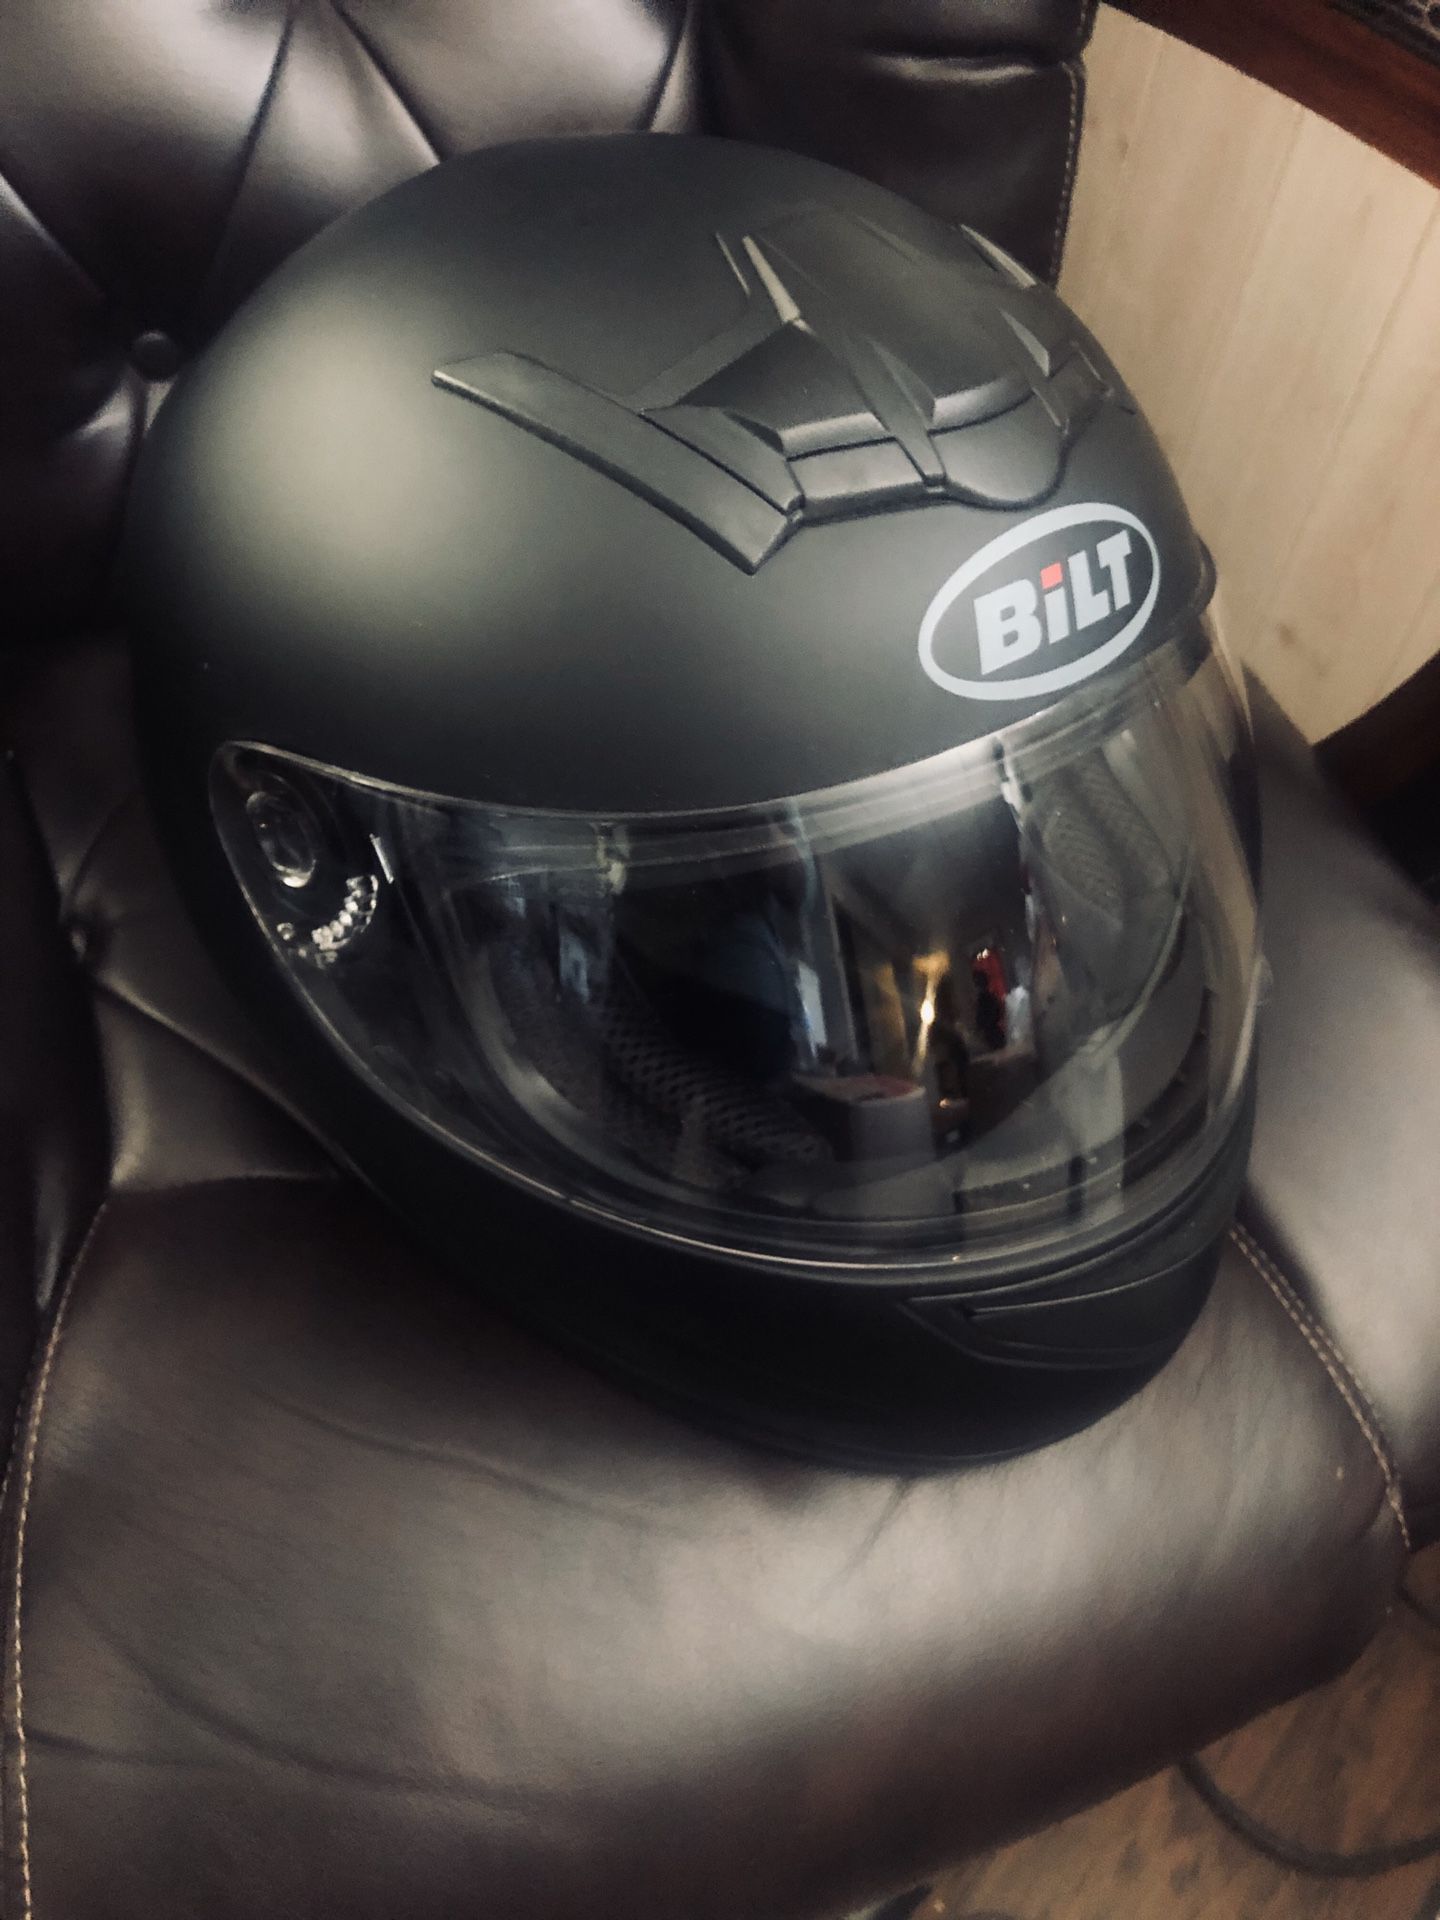 Brand New Motorcycle Helmet- Bilt Brand